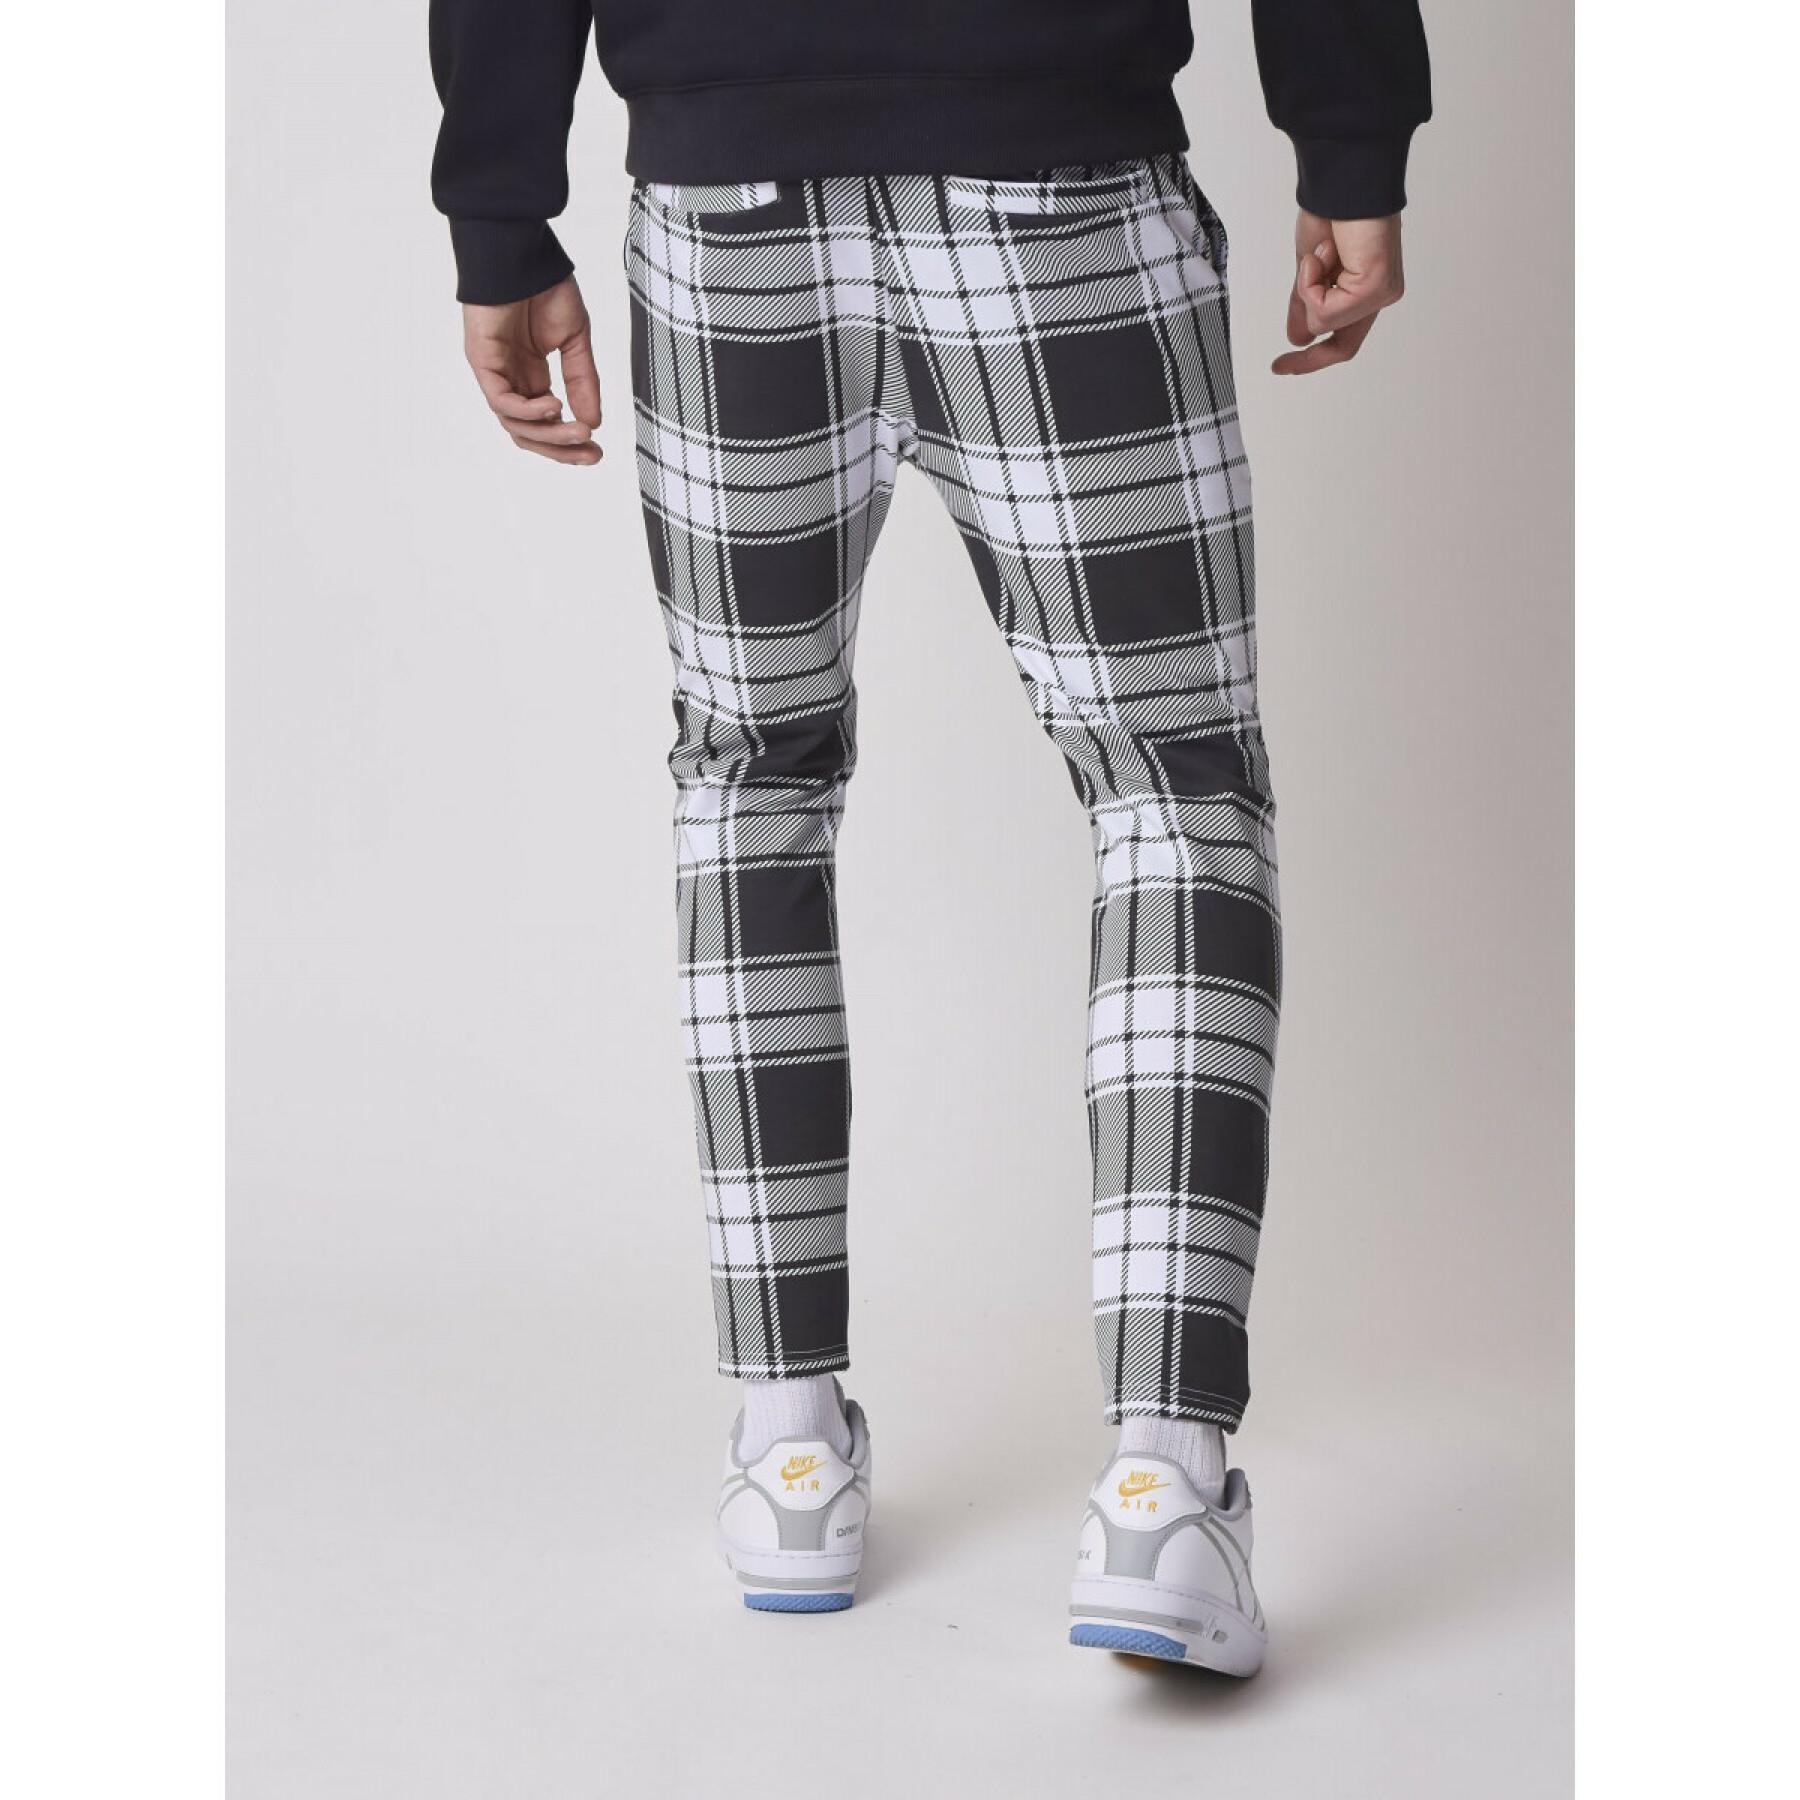 Two-tone checkered jogging suit Project X Paris